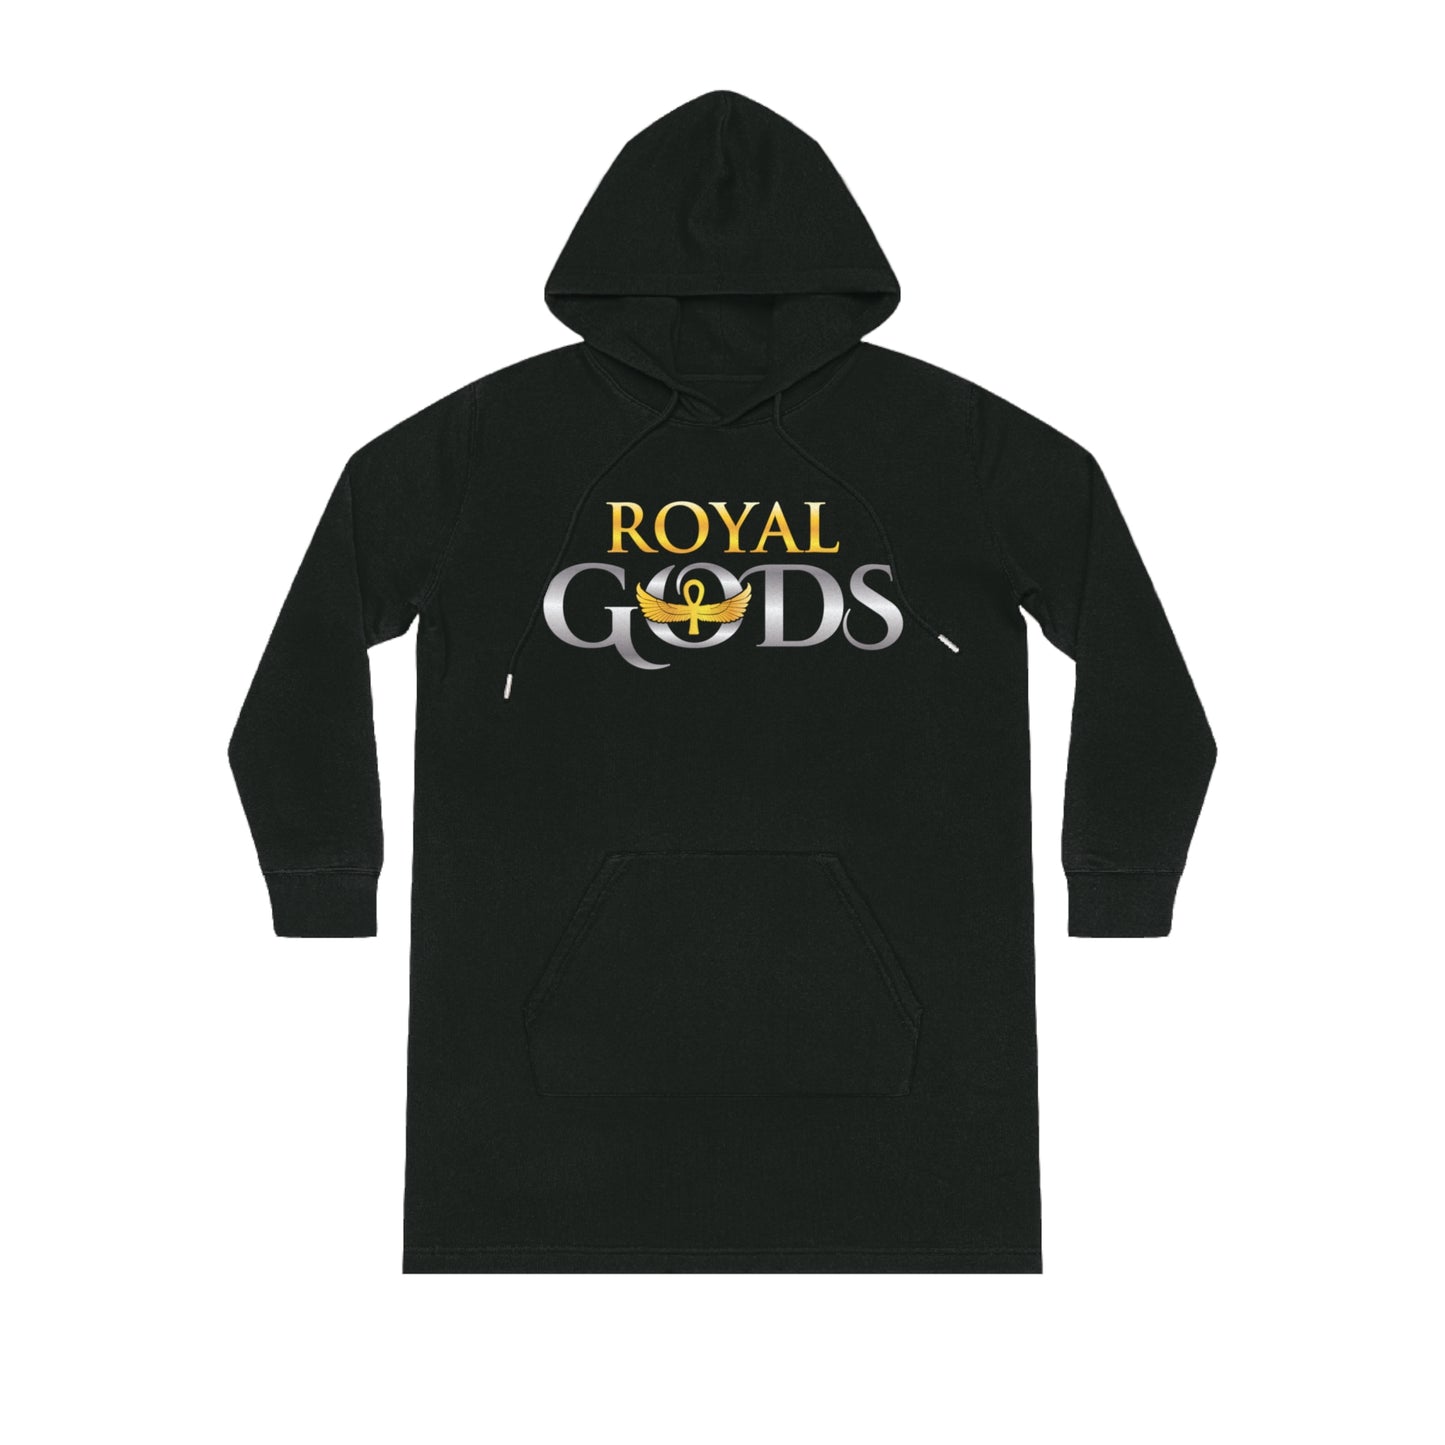 Royal Gods Hoodie Dress